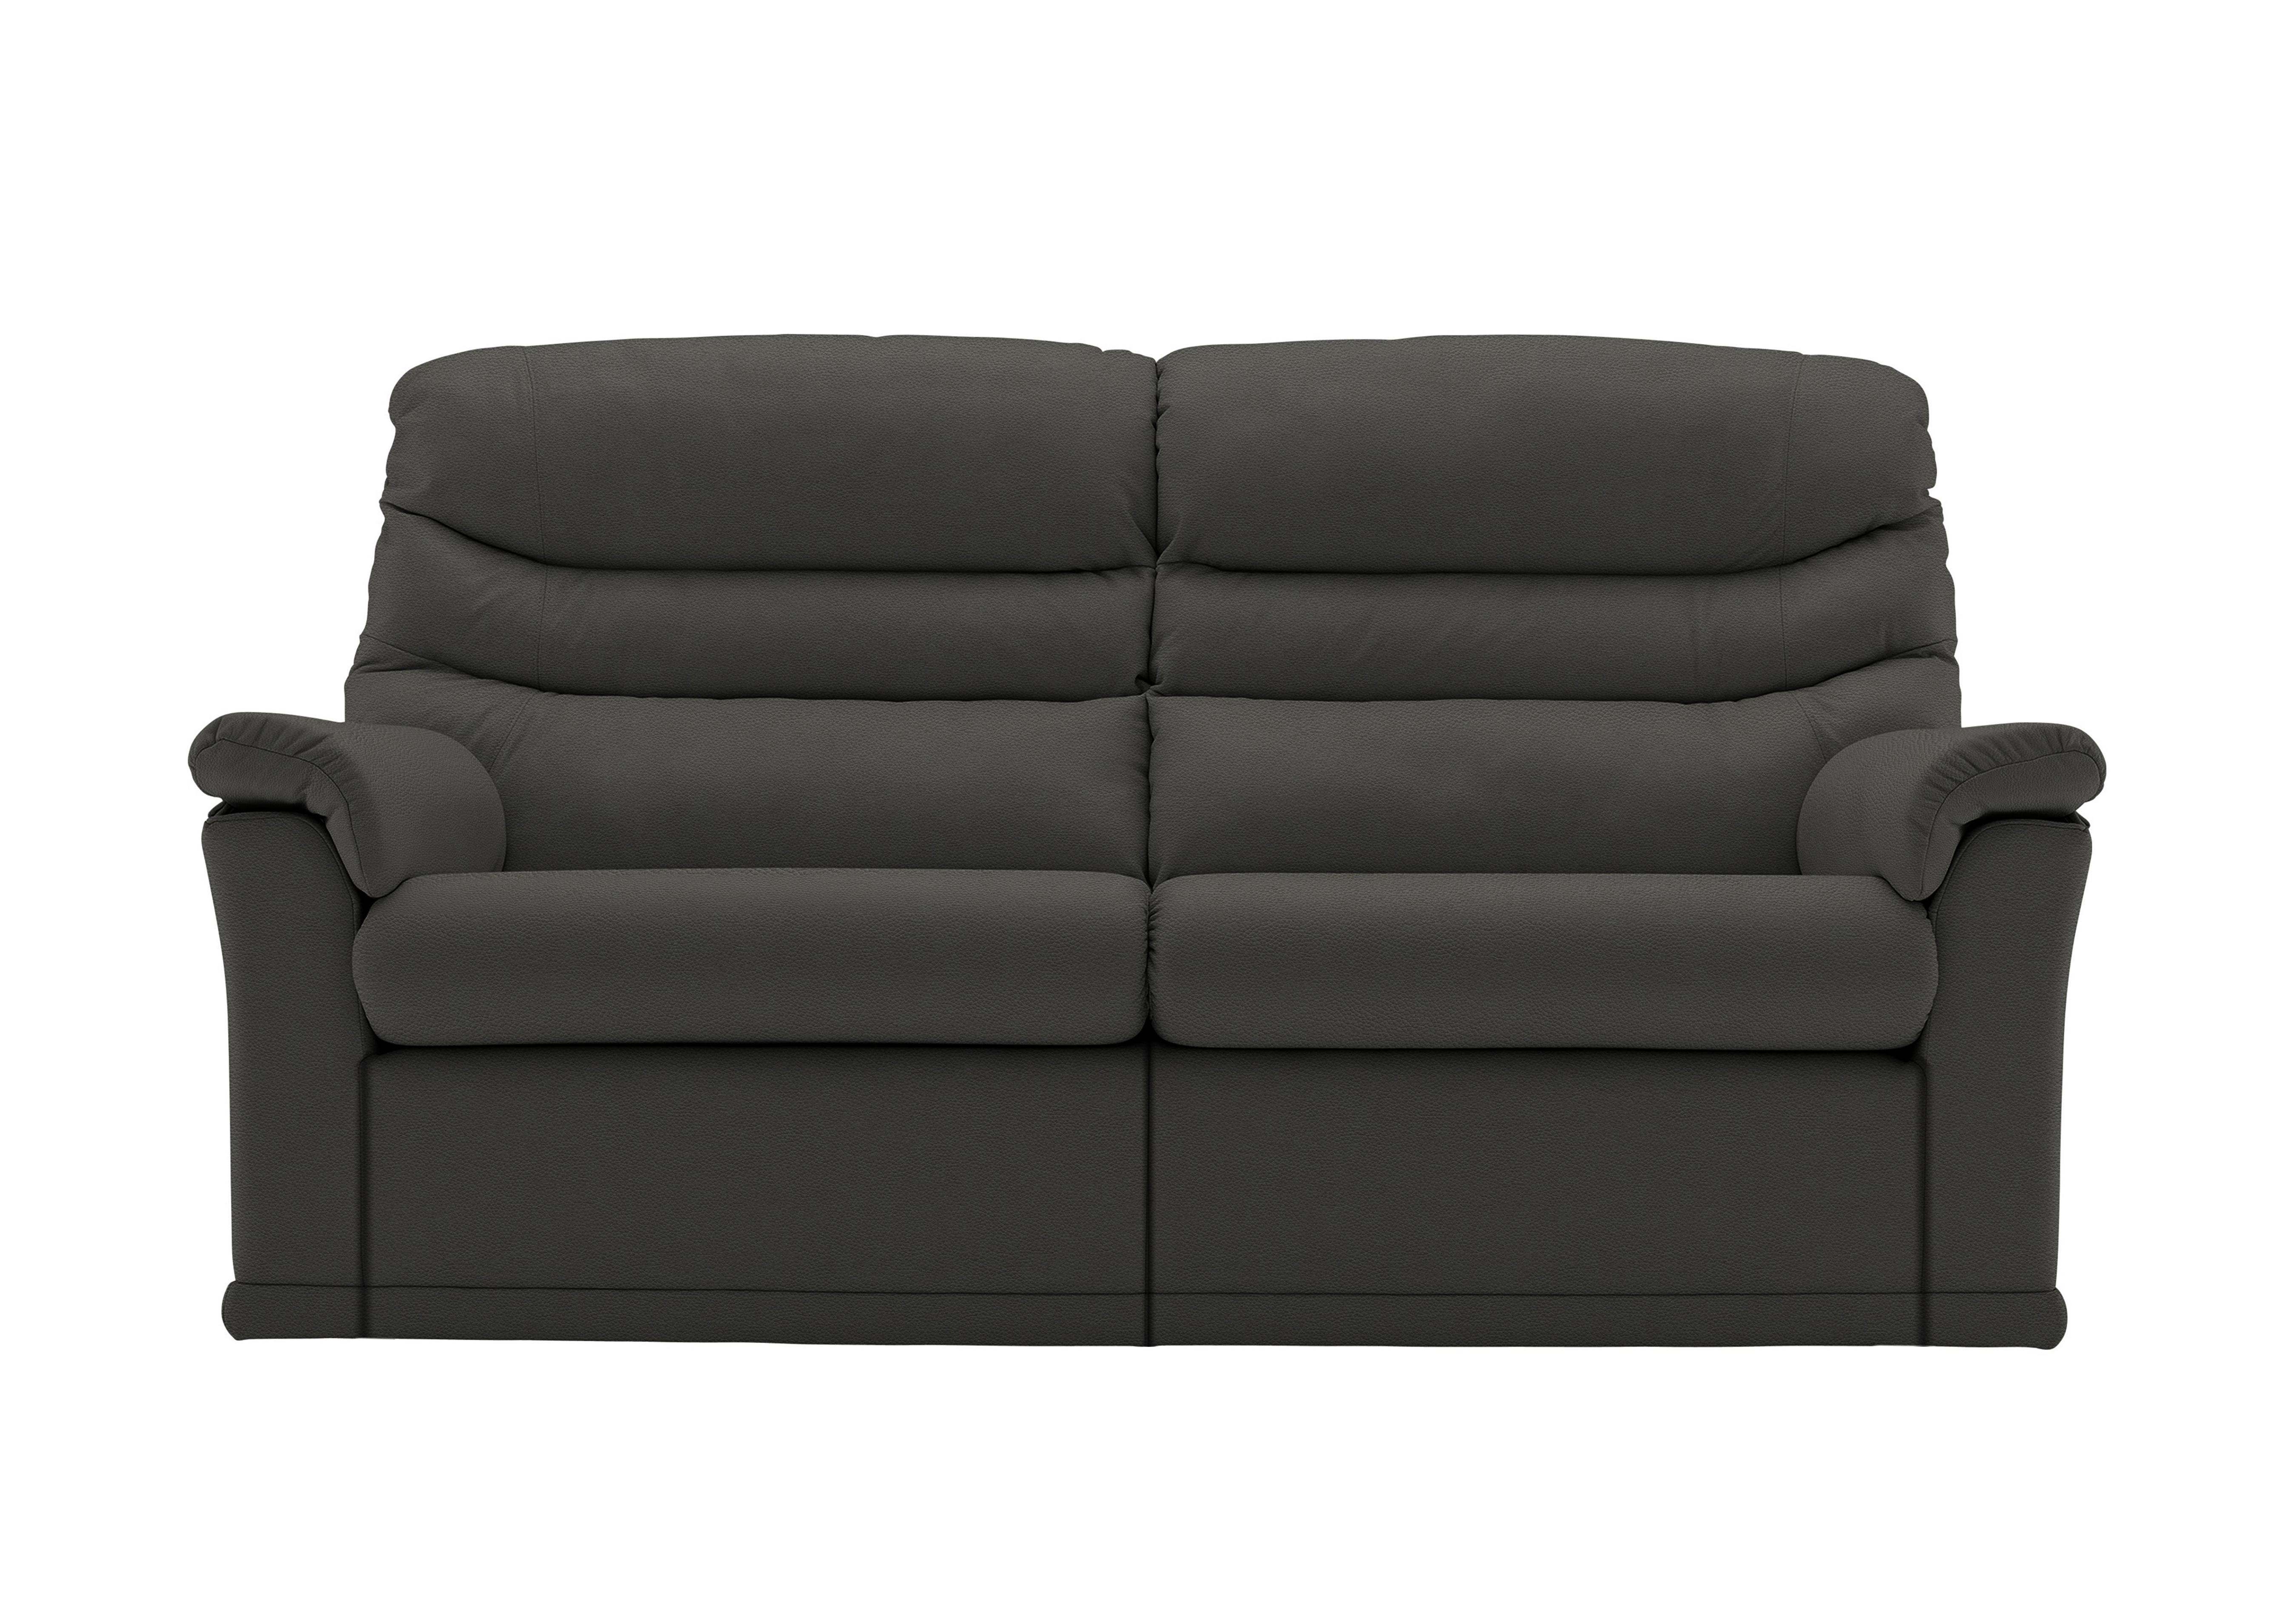 Malvern 2 Cushion 3 Seater Leather Sofa in H004 Oxford Black on Furniture Village